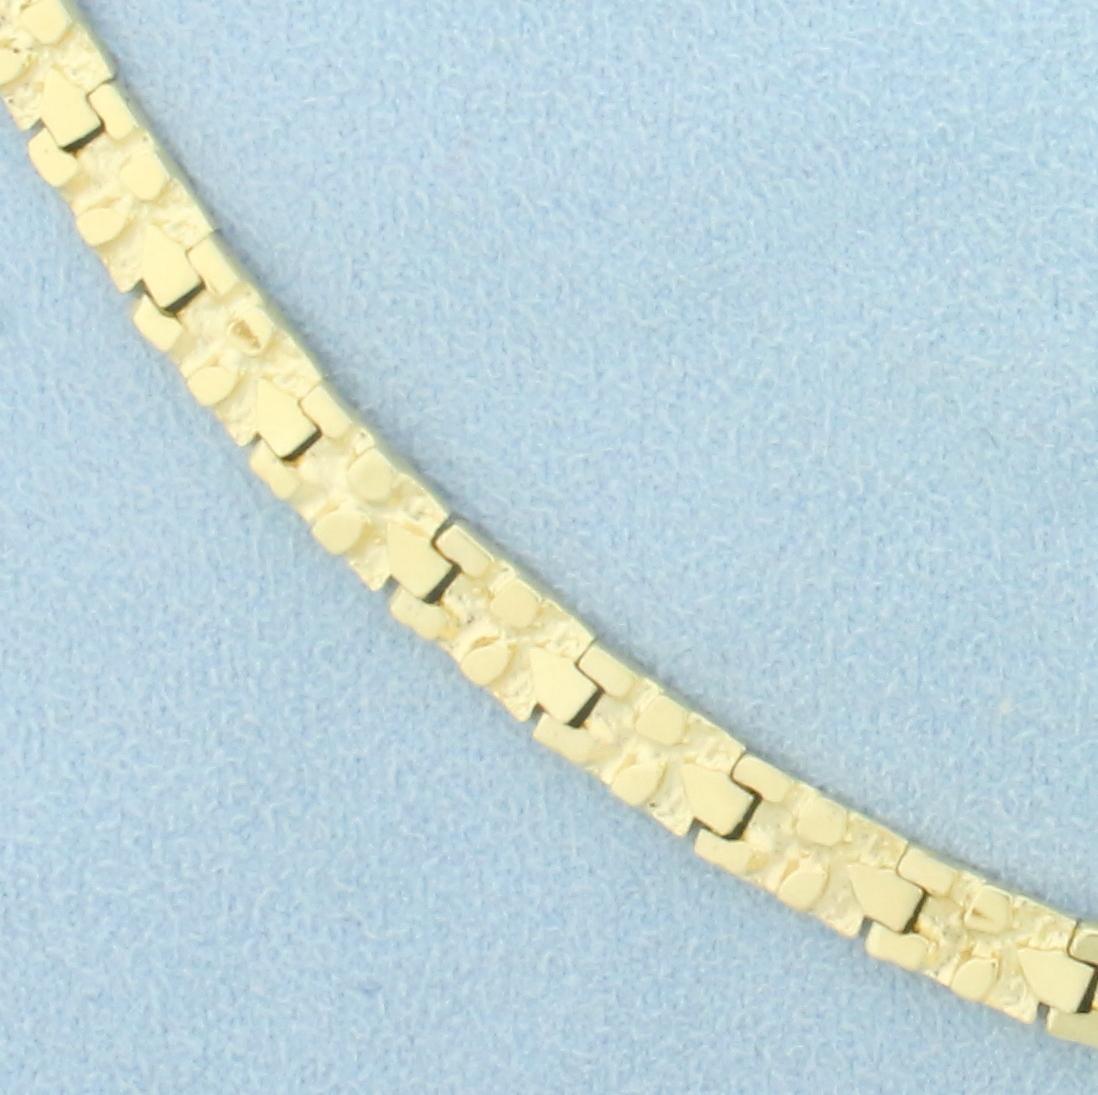 Nugget Design Link Bracelet In 14k Yellow Gold